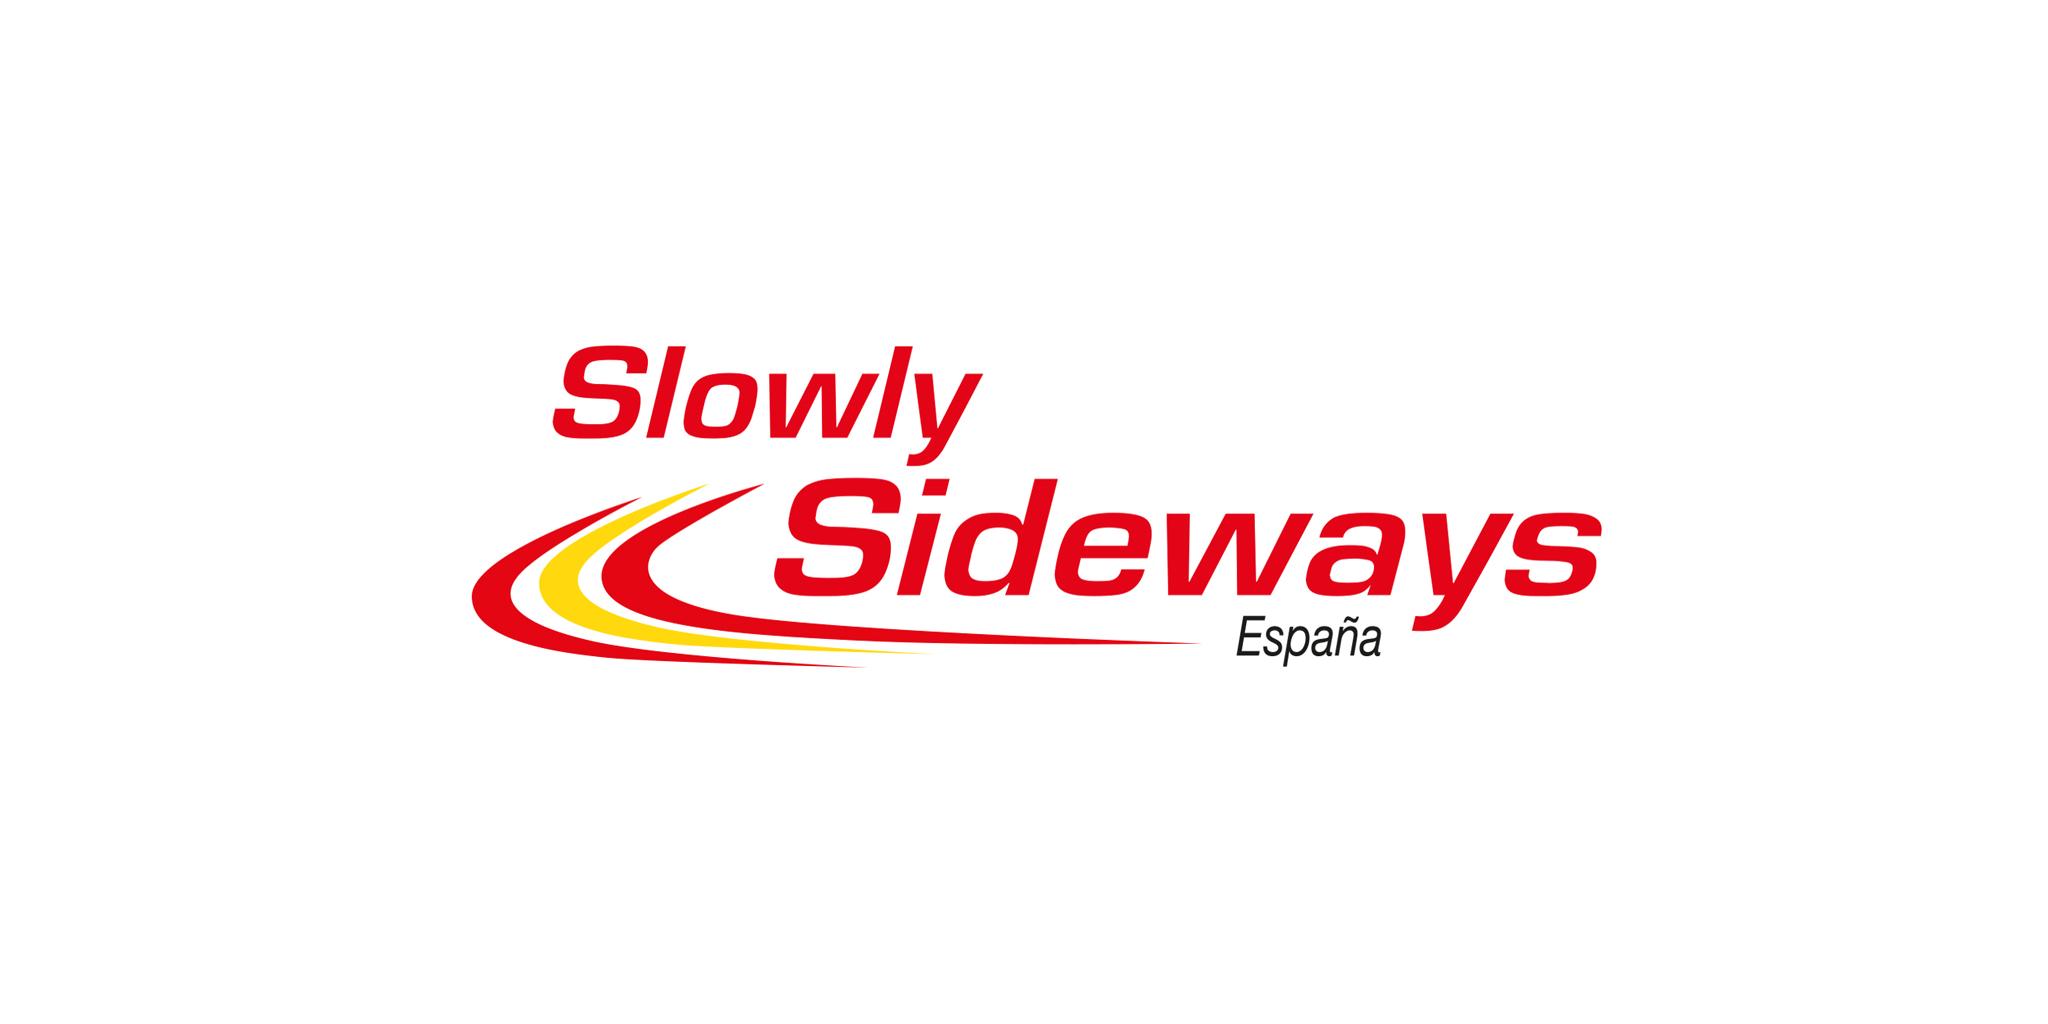 Slowly Sideways España